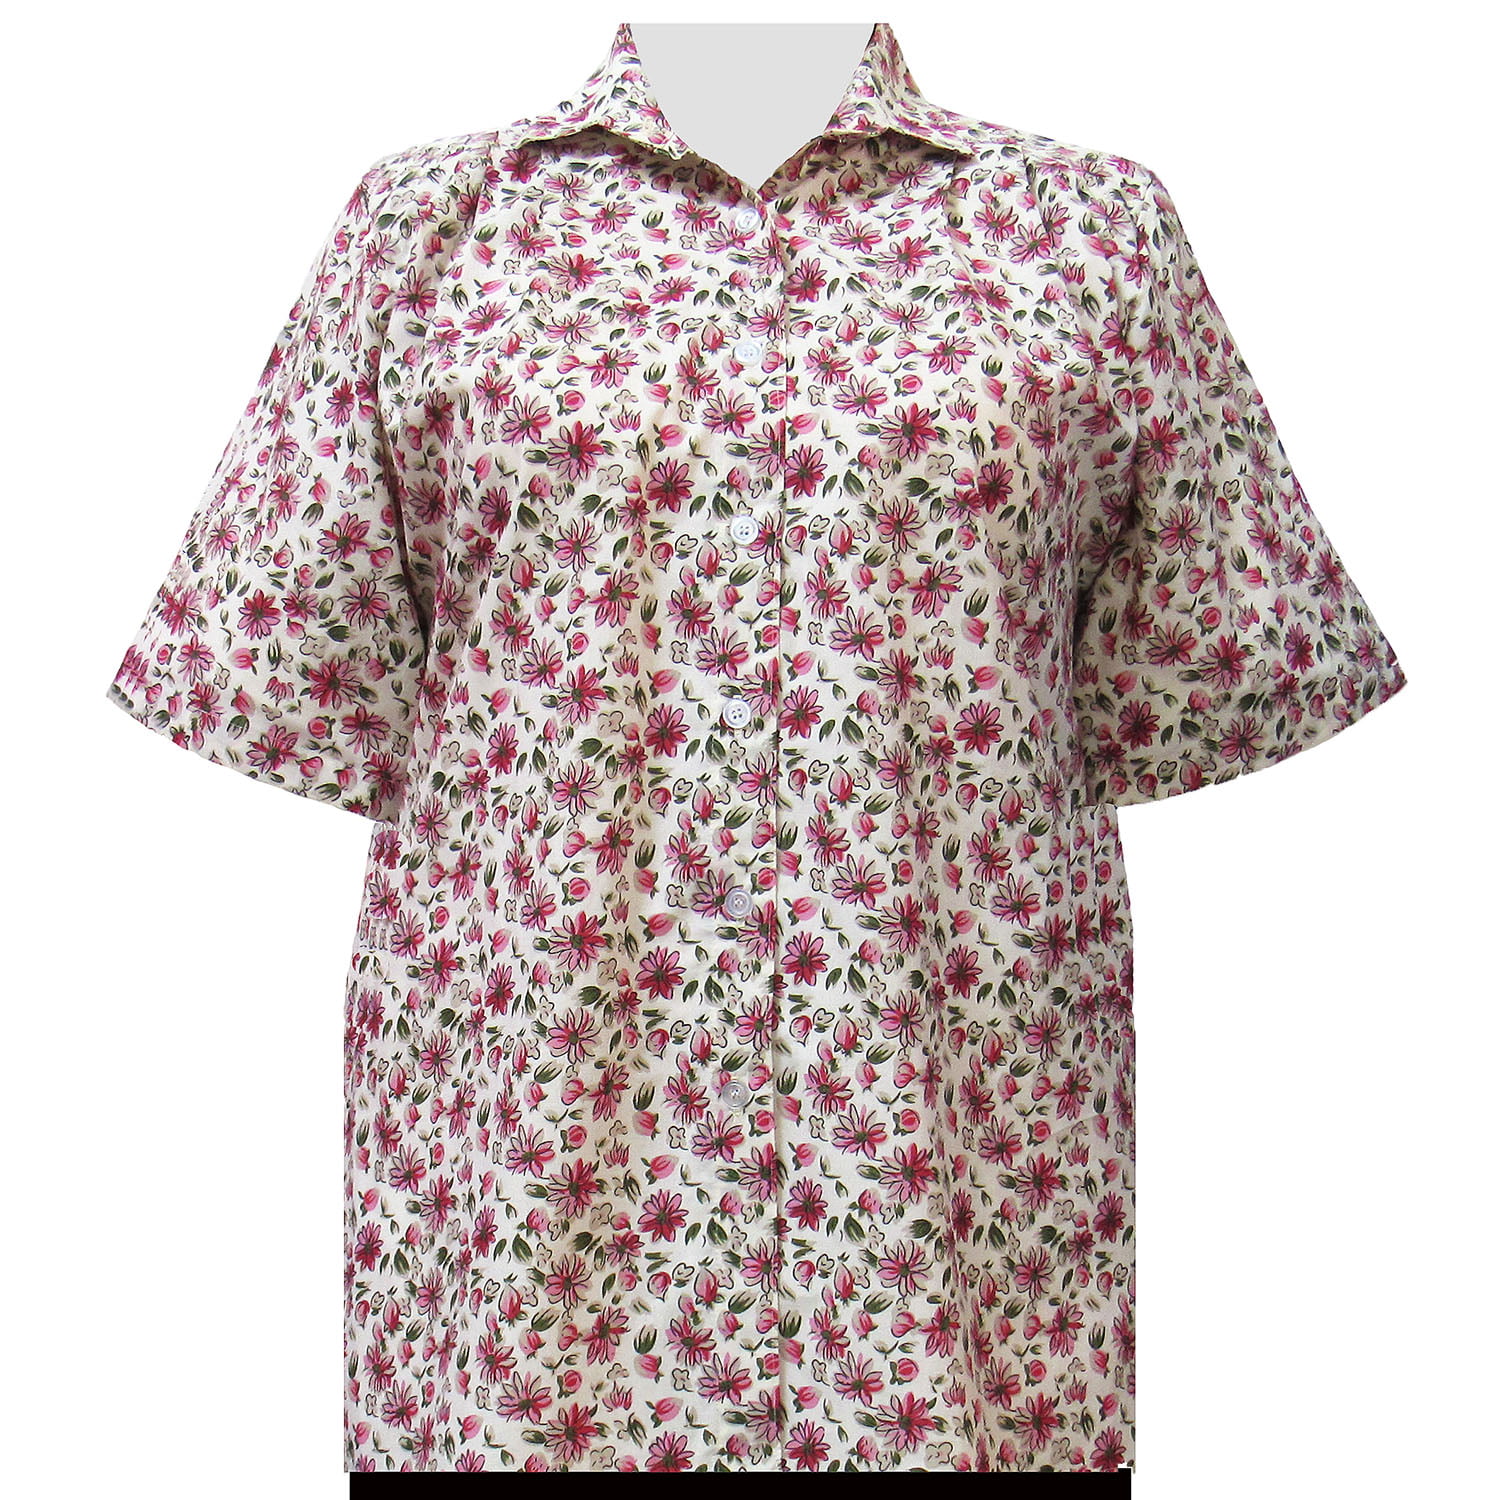 A Personal Touch Women's Plus Size Short Sleeve Button-Up Cotton Blouse ...